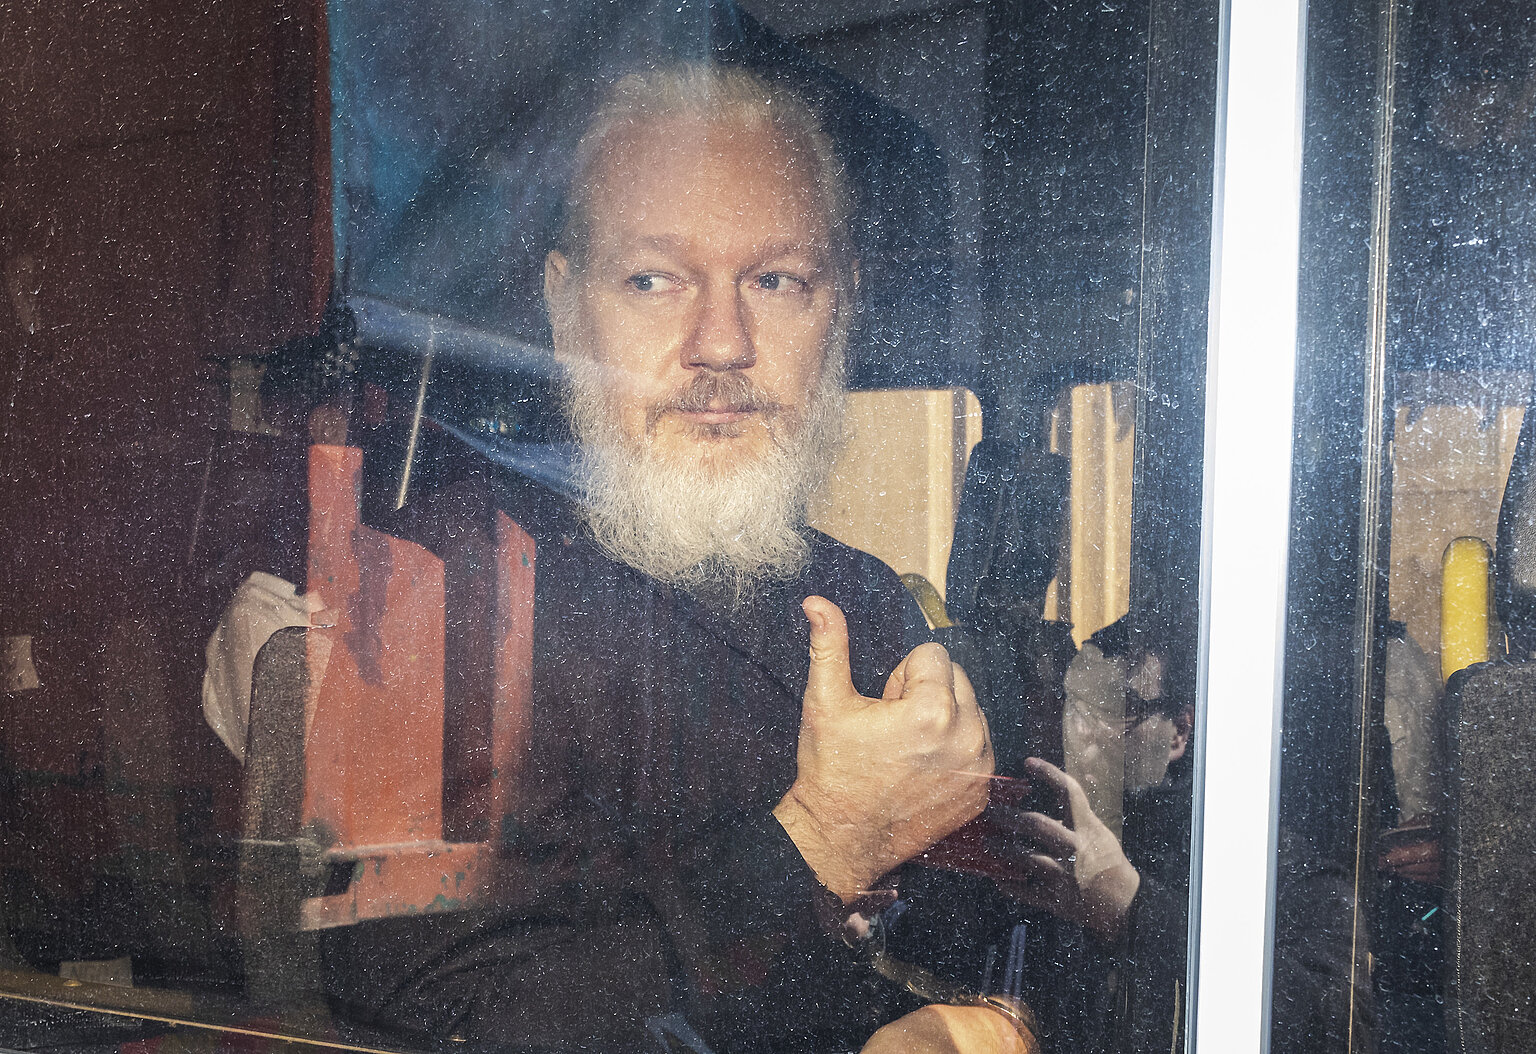  – Julian Assange: Unschuldig in Haft. Foto: picture alliance/Zuma Press